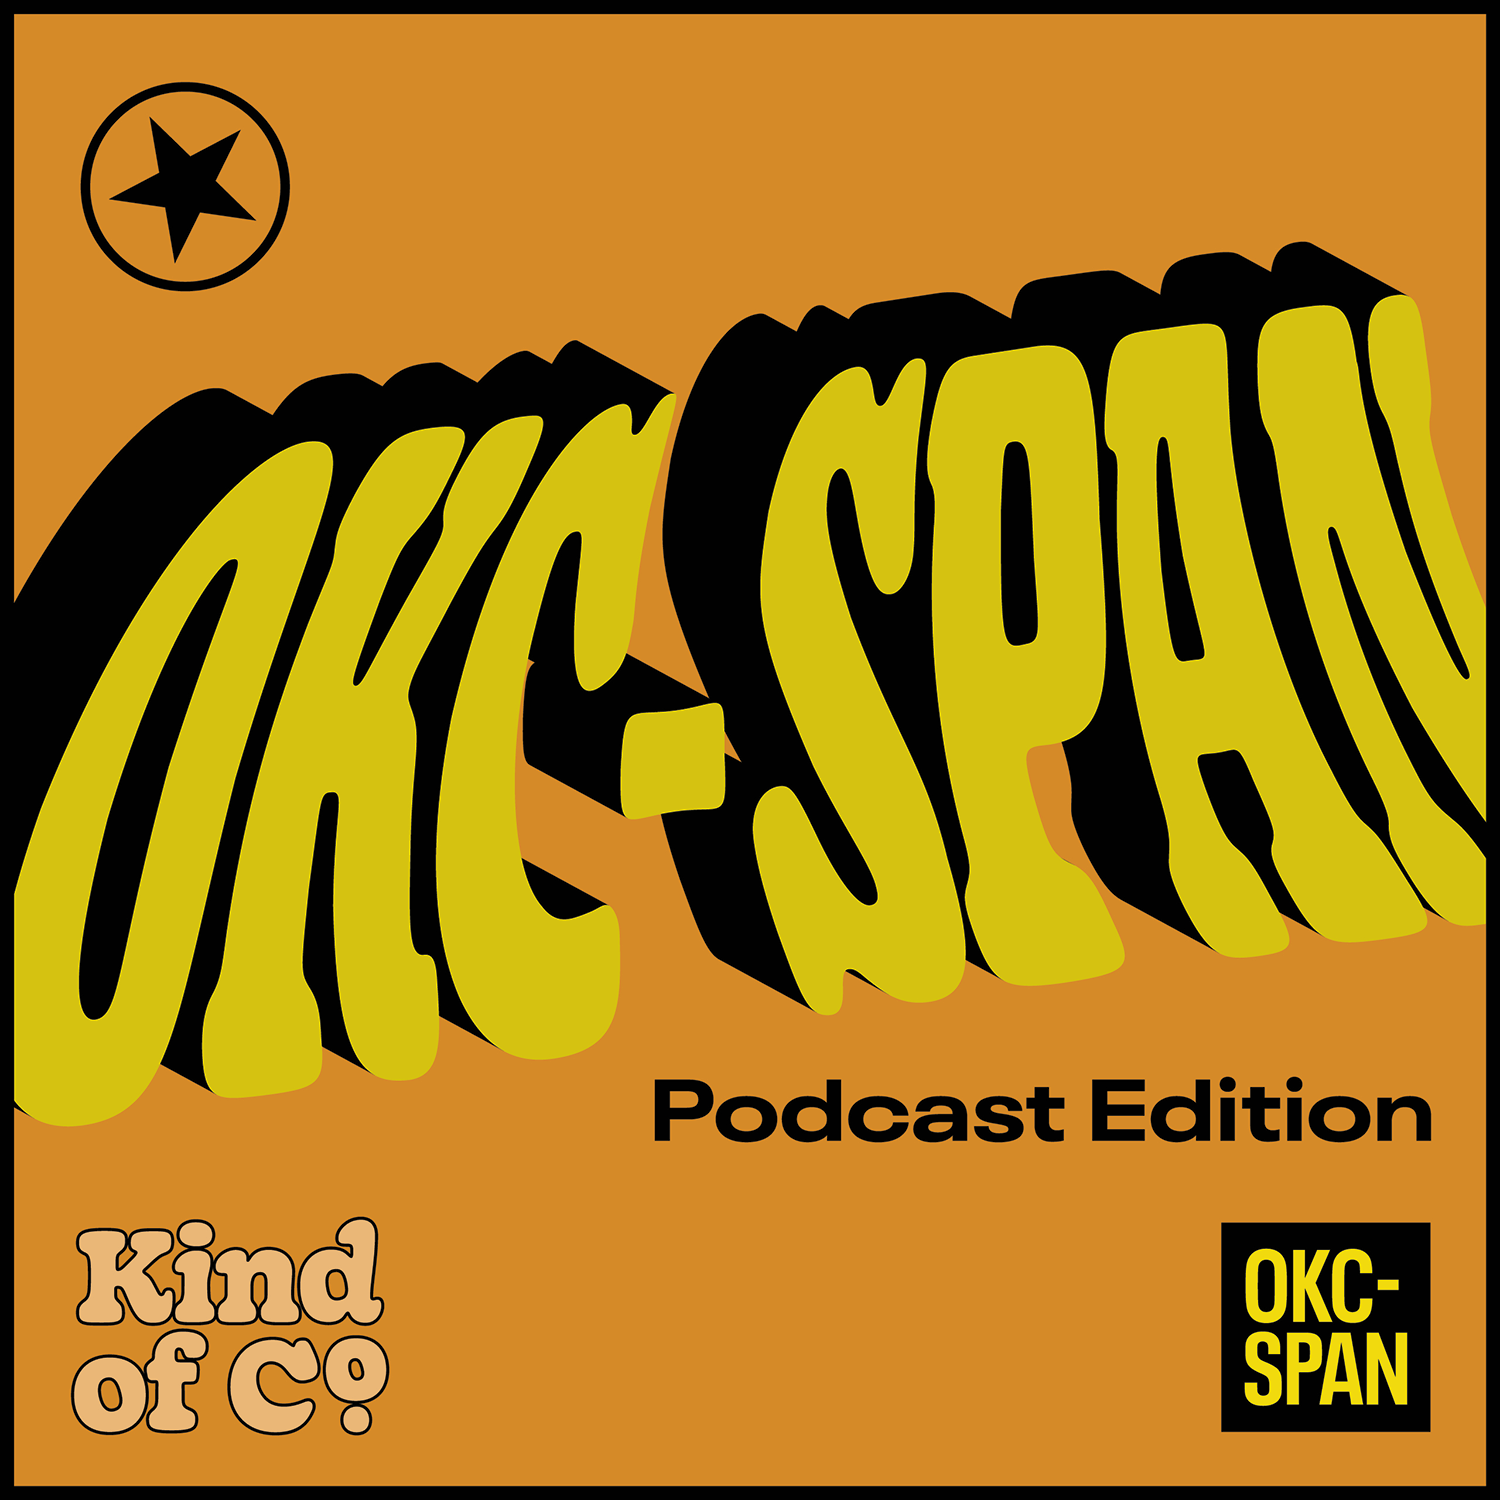 OKC-SPAN: Podcast Edition